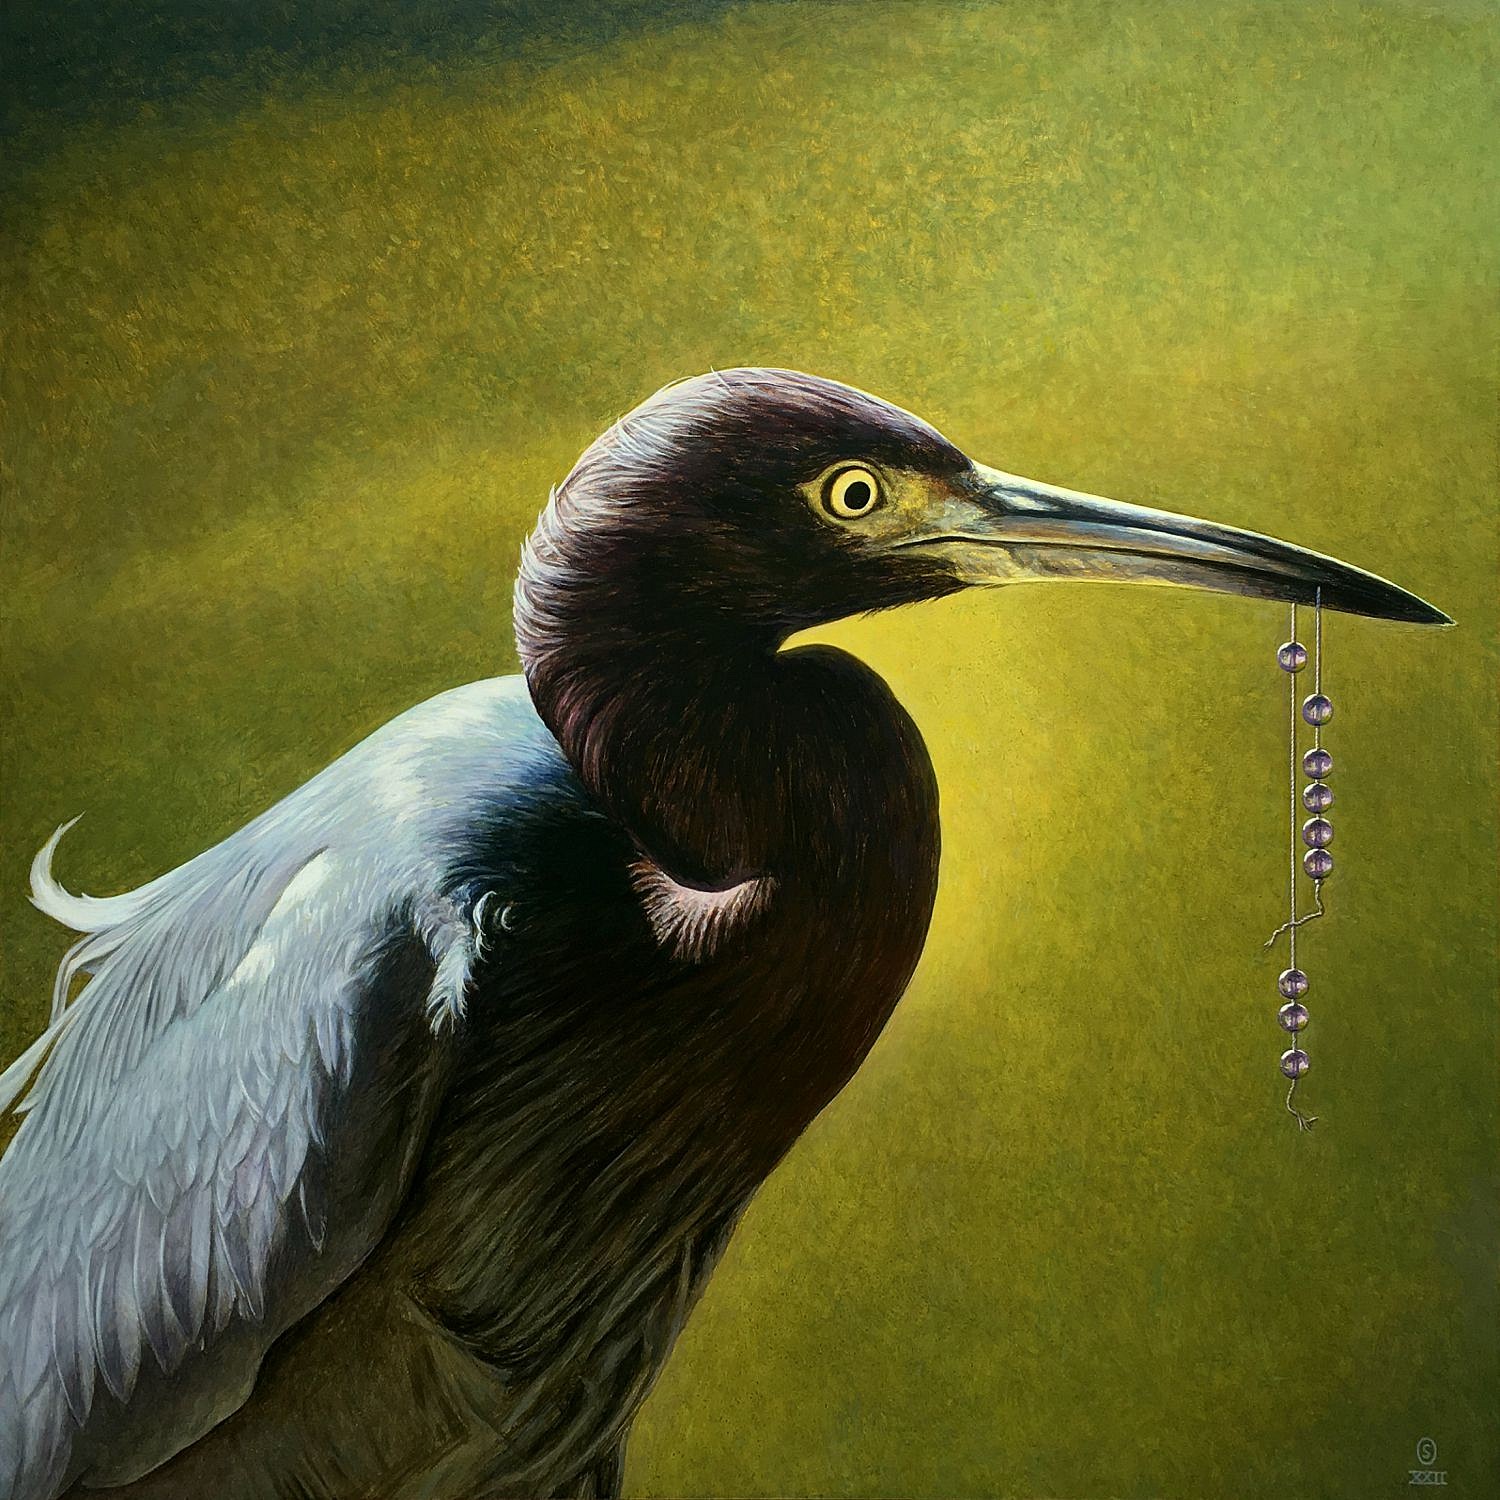 Intimate Animal and Bird Paintings | Press Release | Tew Galleries